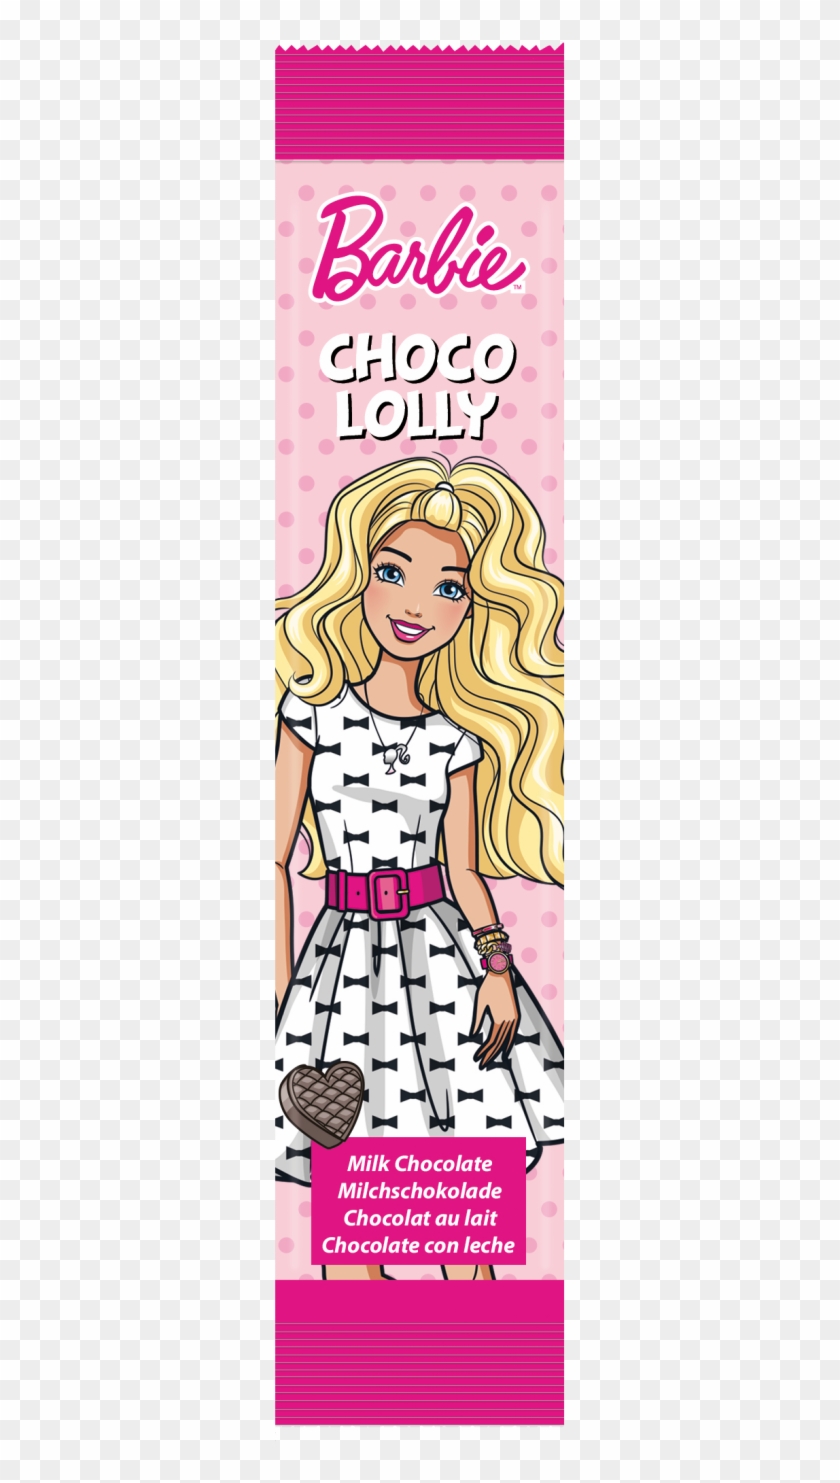 Barbie Choco Lolly - Barbie Clipart